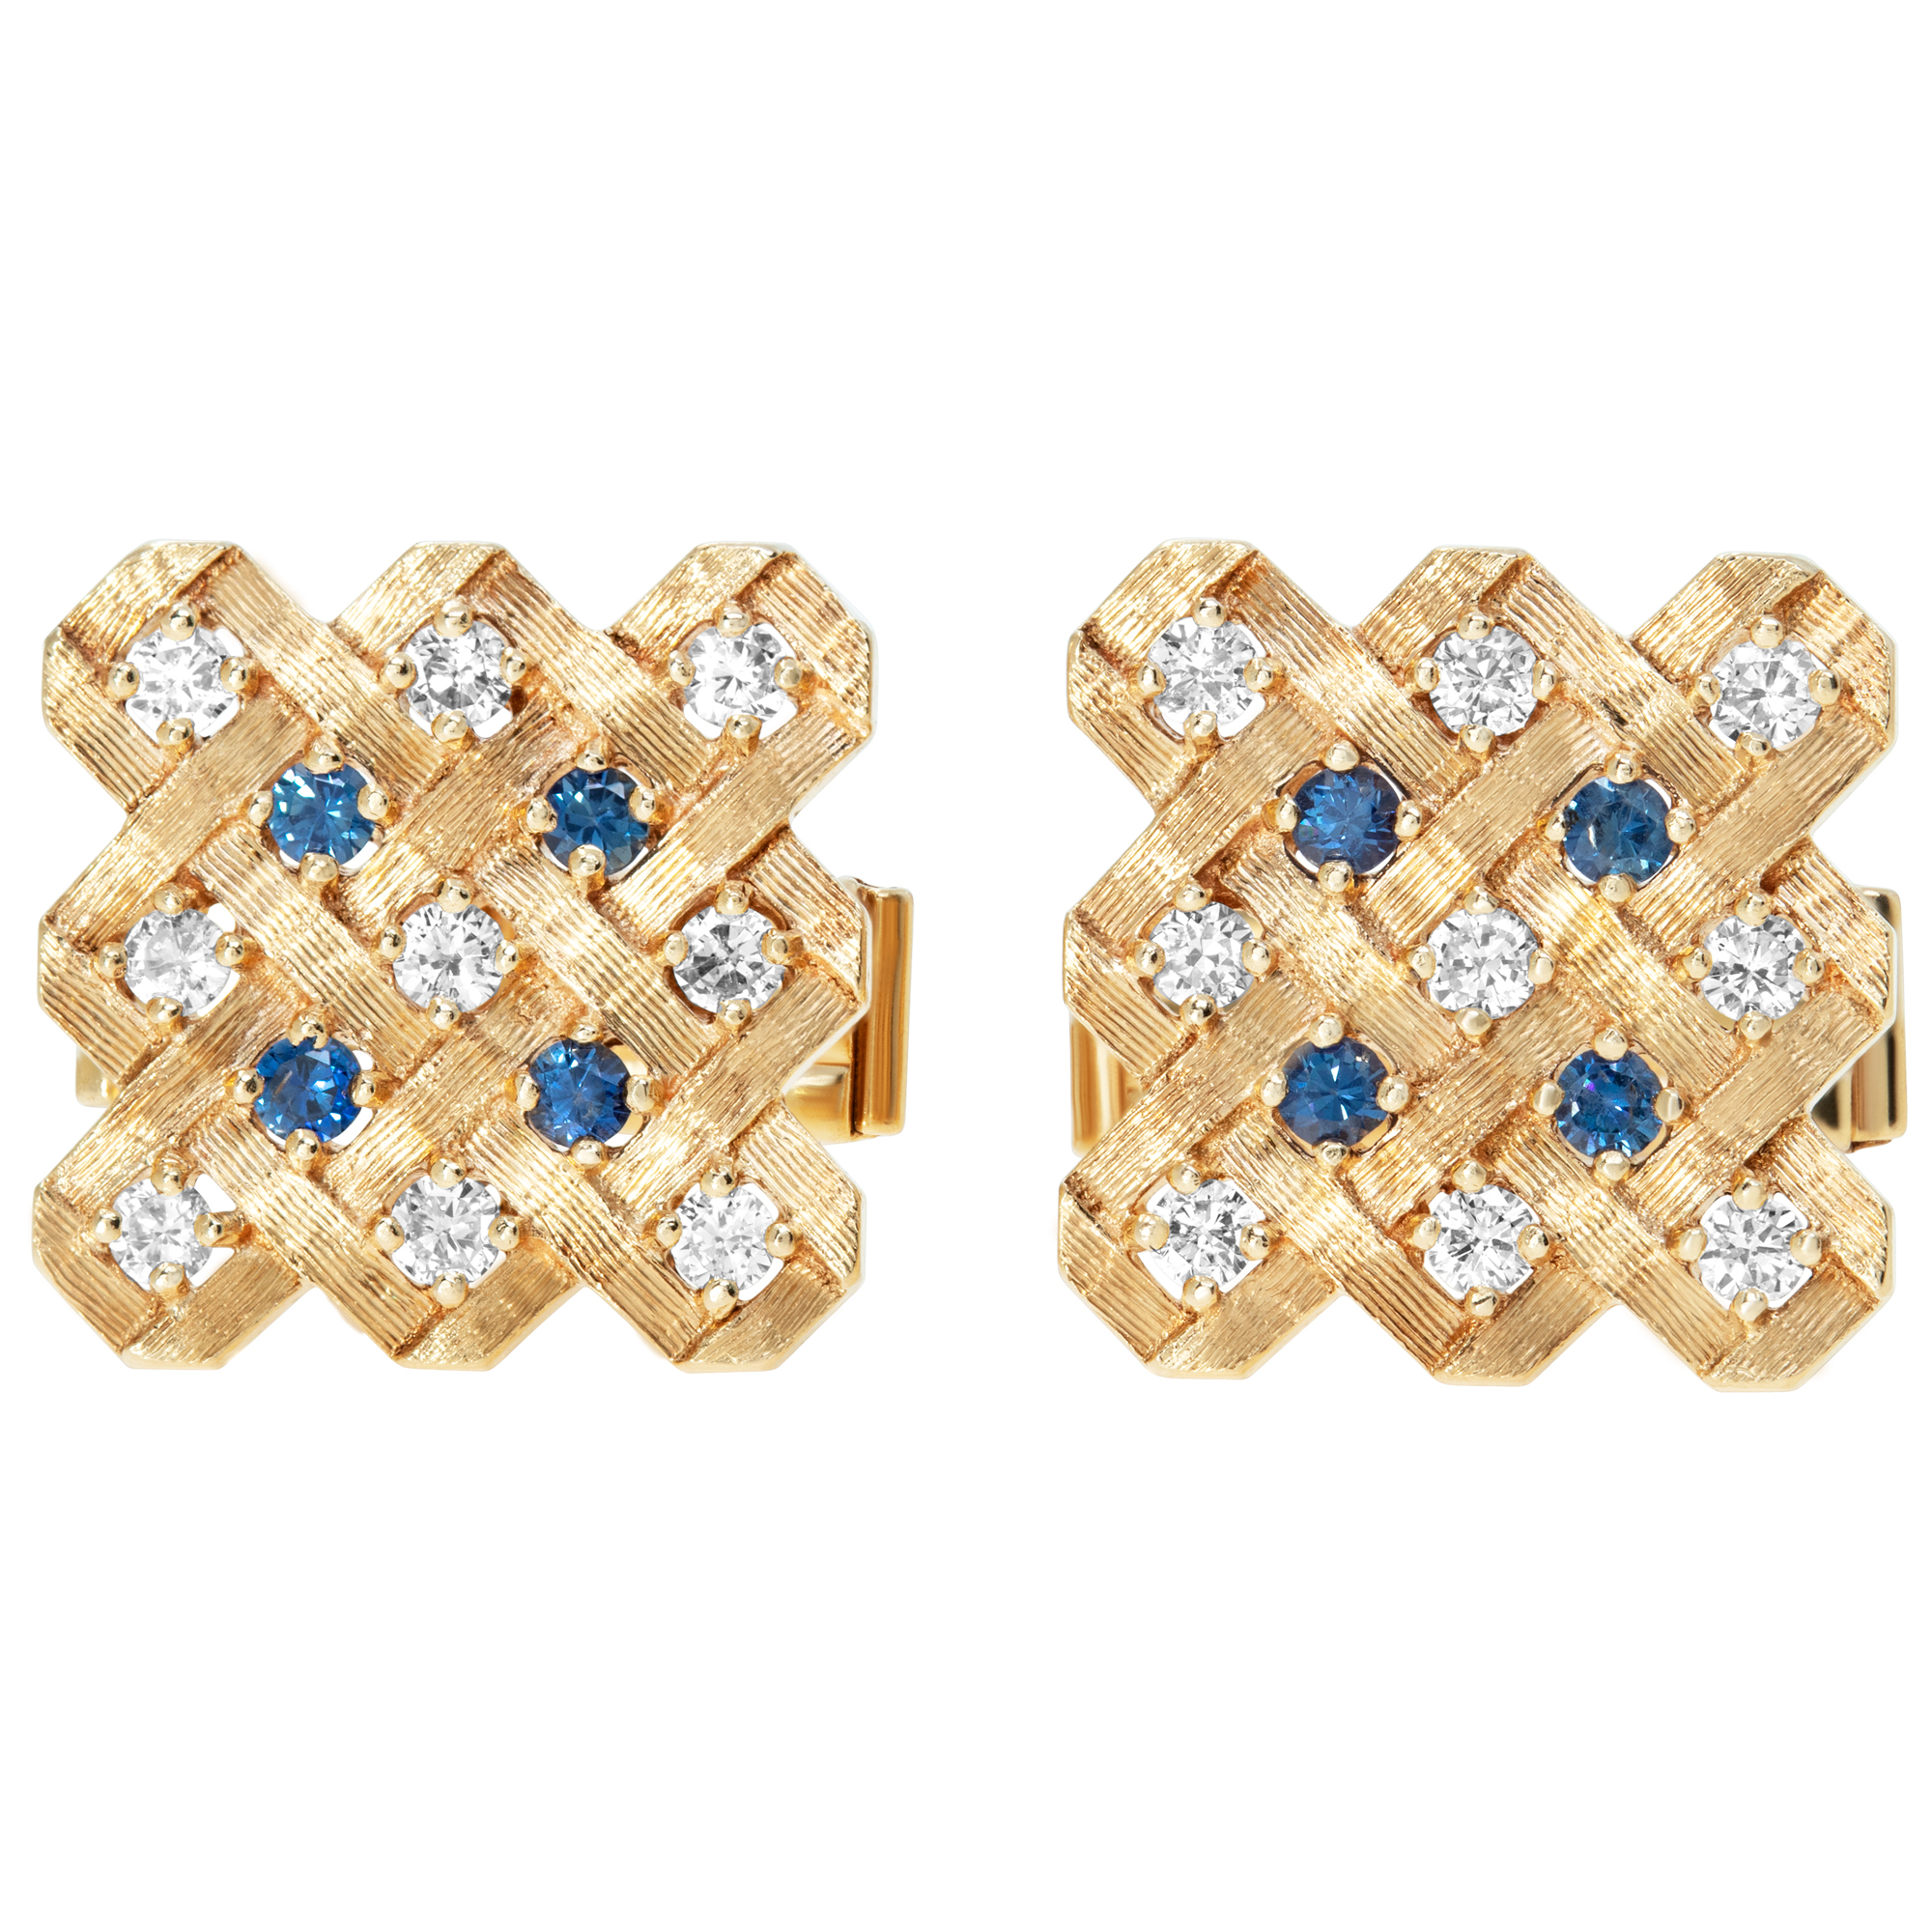 Diamond and sapphire cufflinks in 14k (Stones)